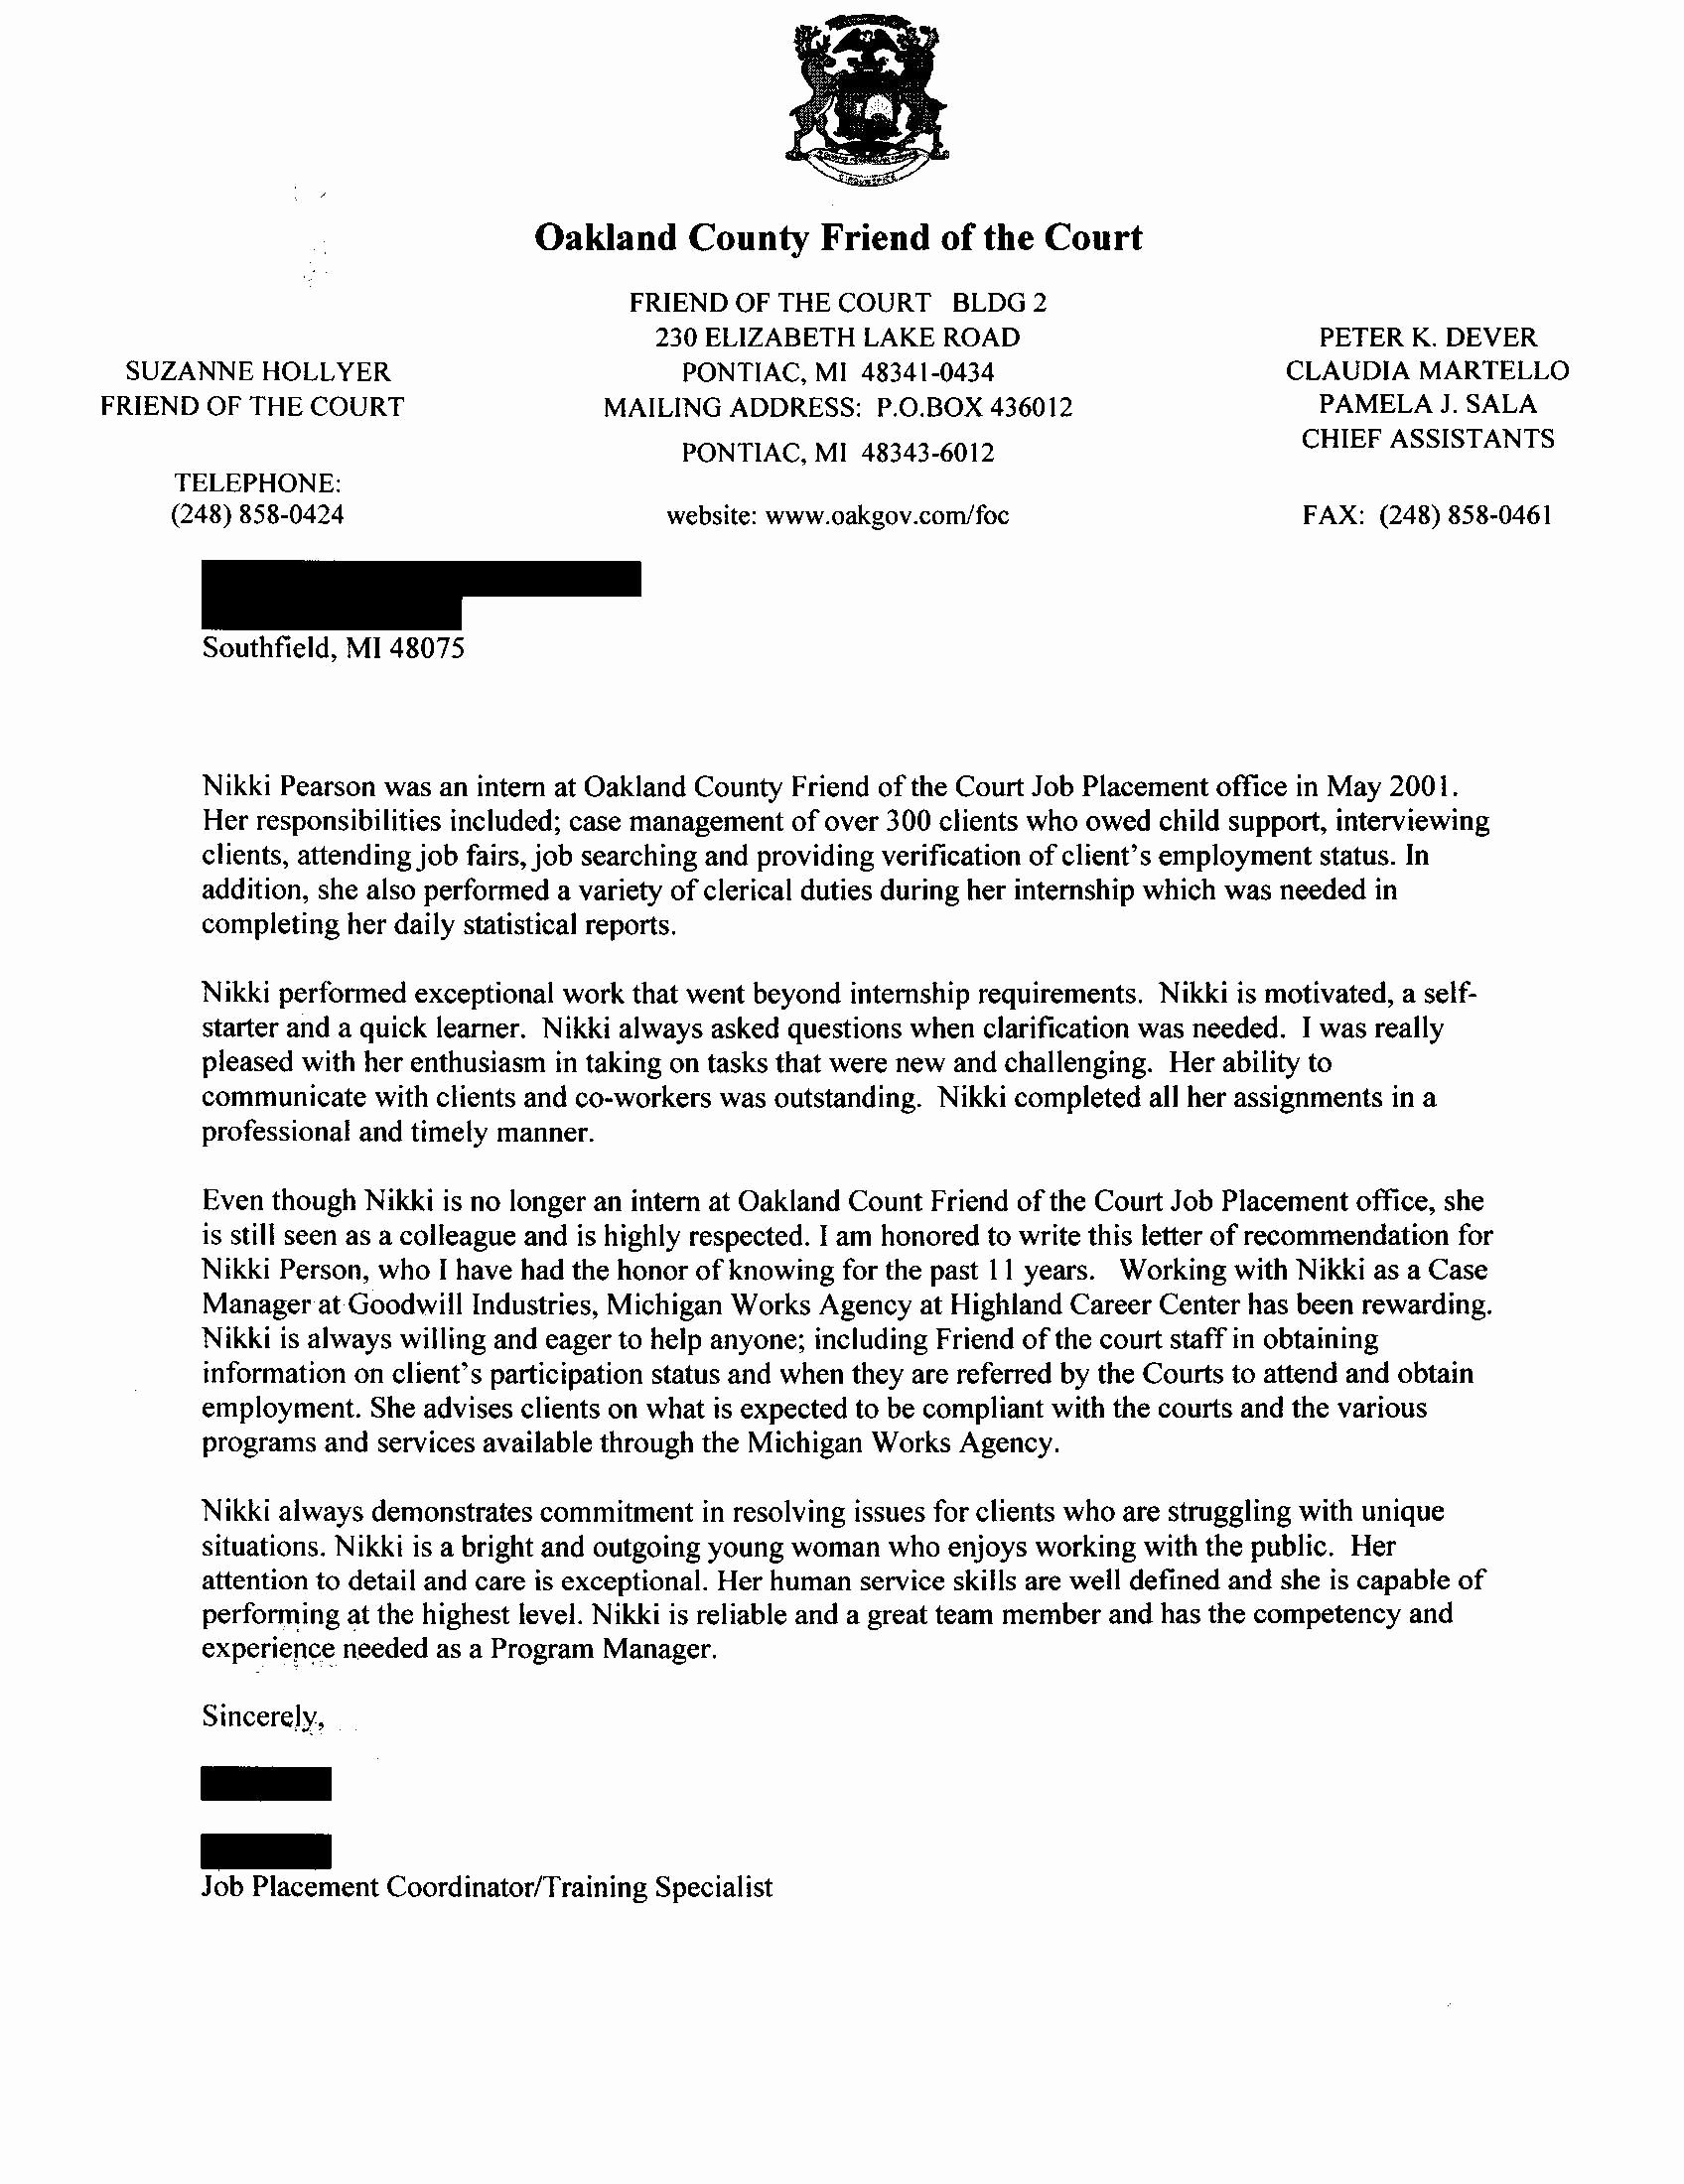 Intern Letter Of Recommendation Fresh Letter Of Re Mendation From Intern Supervisor